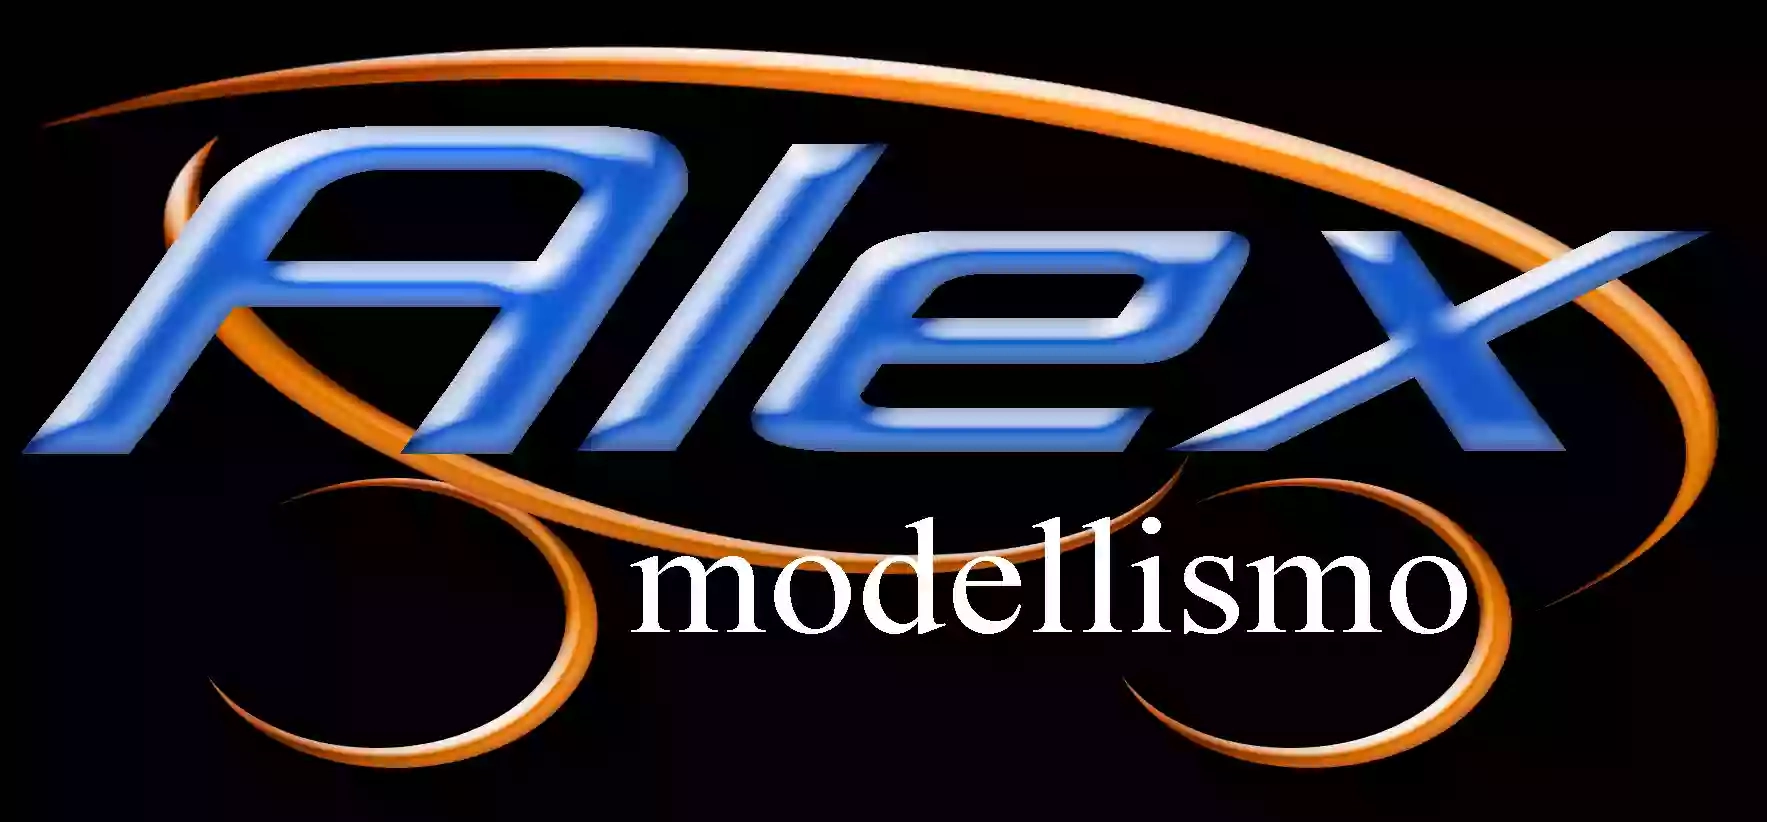 Alex-Modellismo